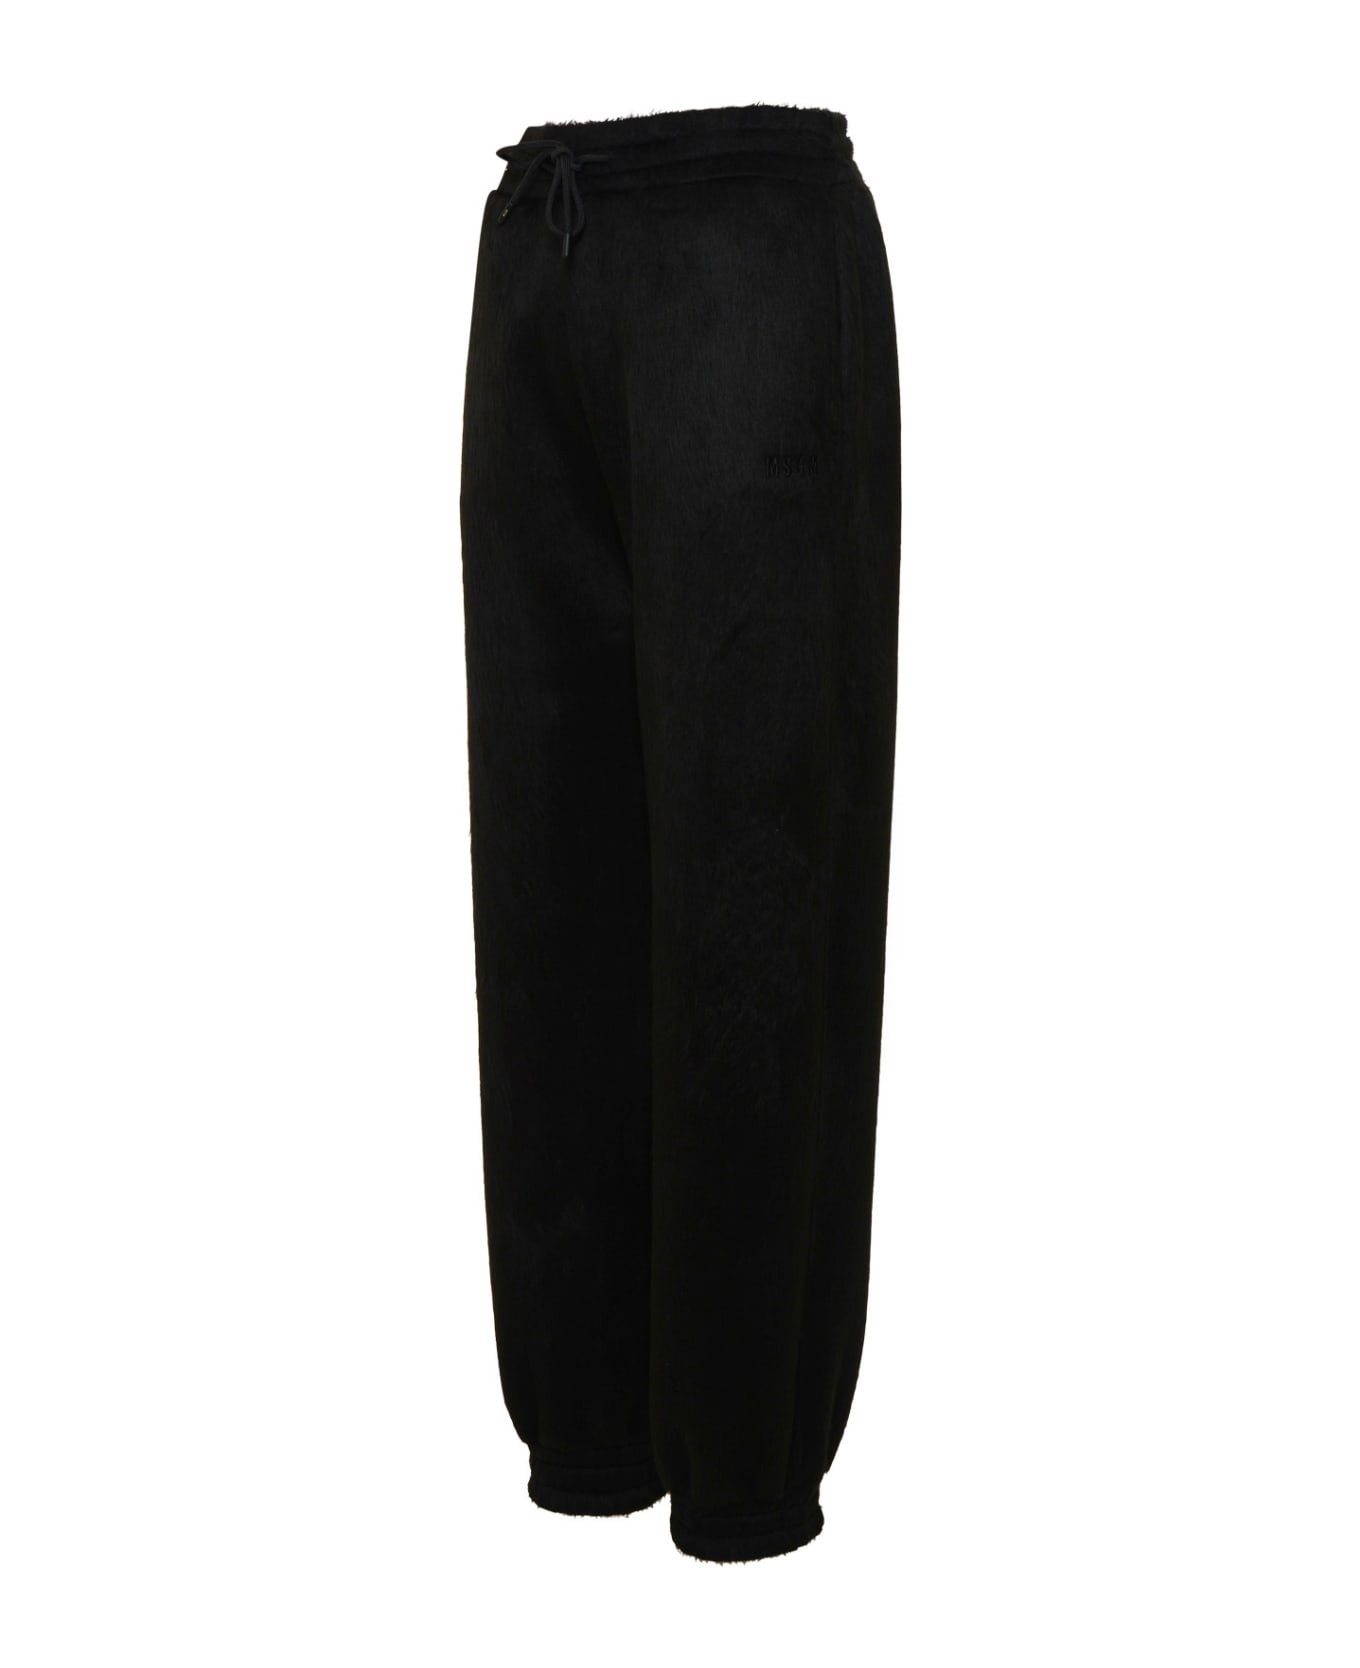 MSGM Black Acrylic Blend Pants - Black スウェットパンツ